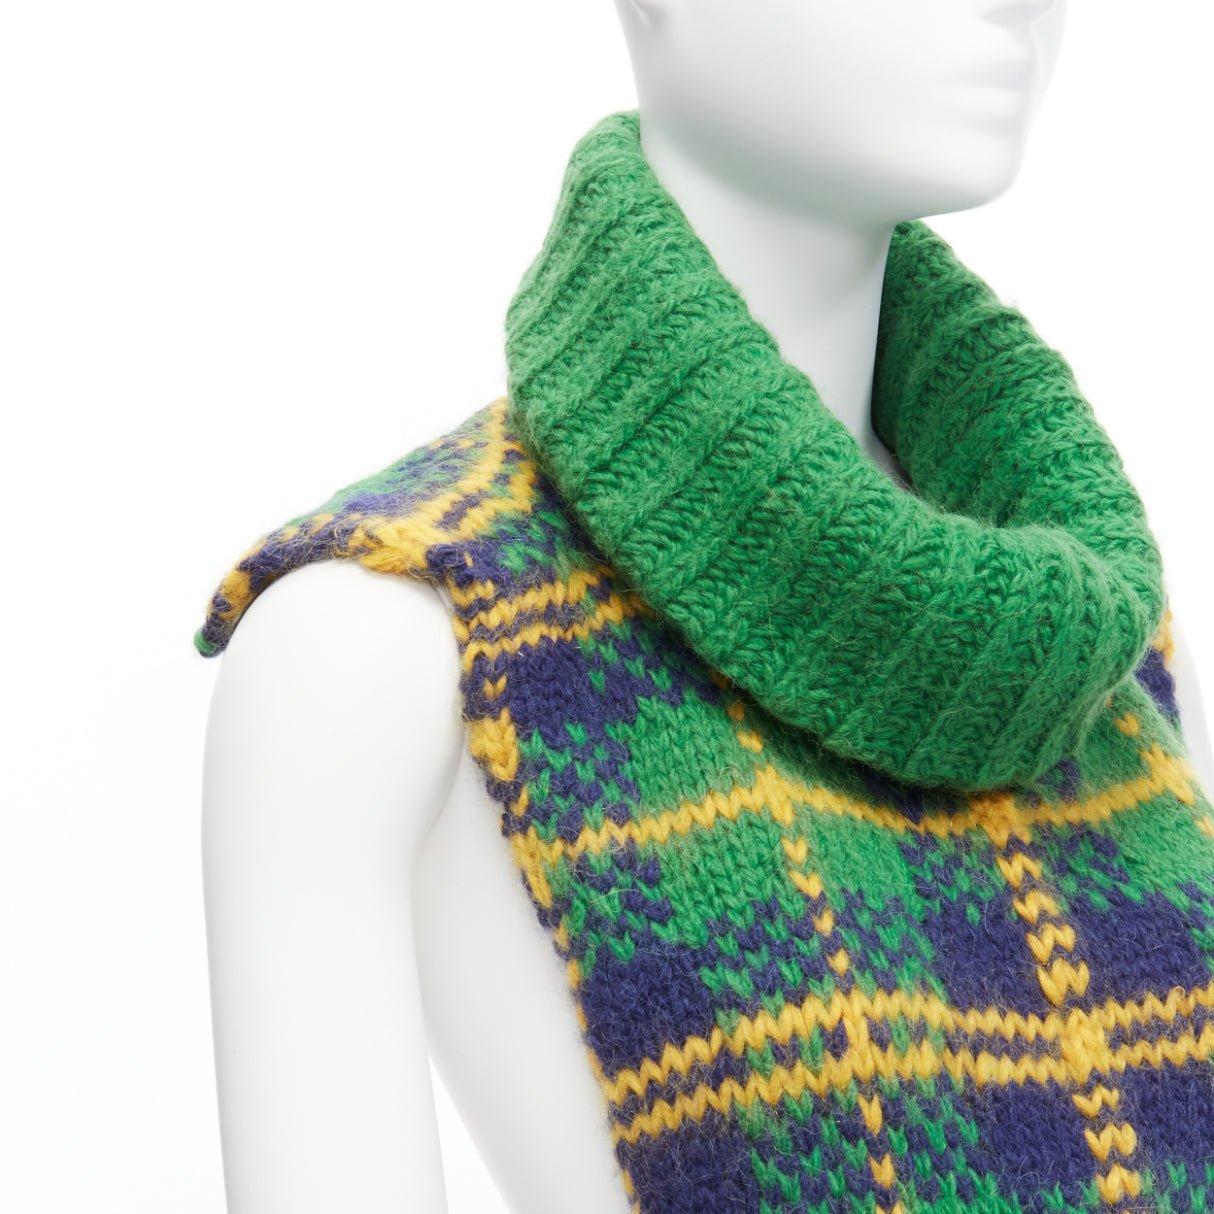 OLD CELINE Phoebe Philo plaid check wool blend turtleneck vest dickie scarf 3